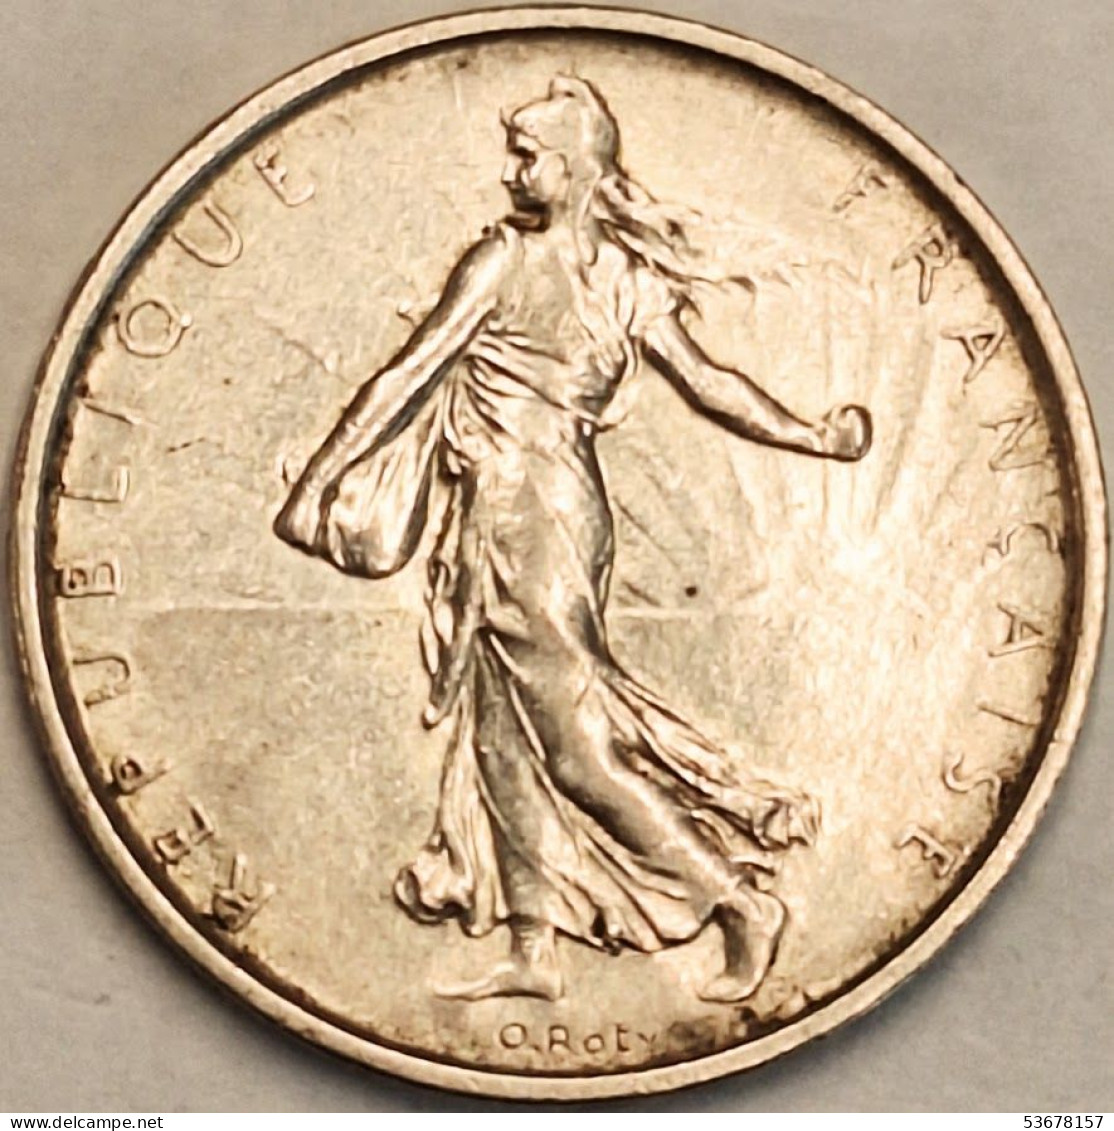 France - 5 Francs 1964, KM# 926, Silver (#4333) - 5 Francs